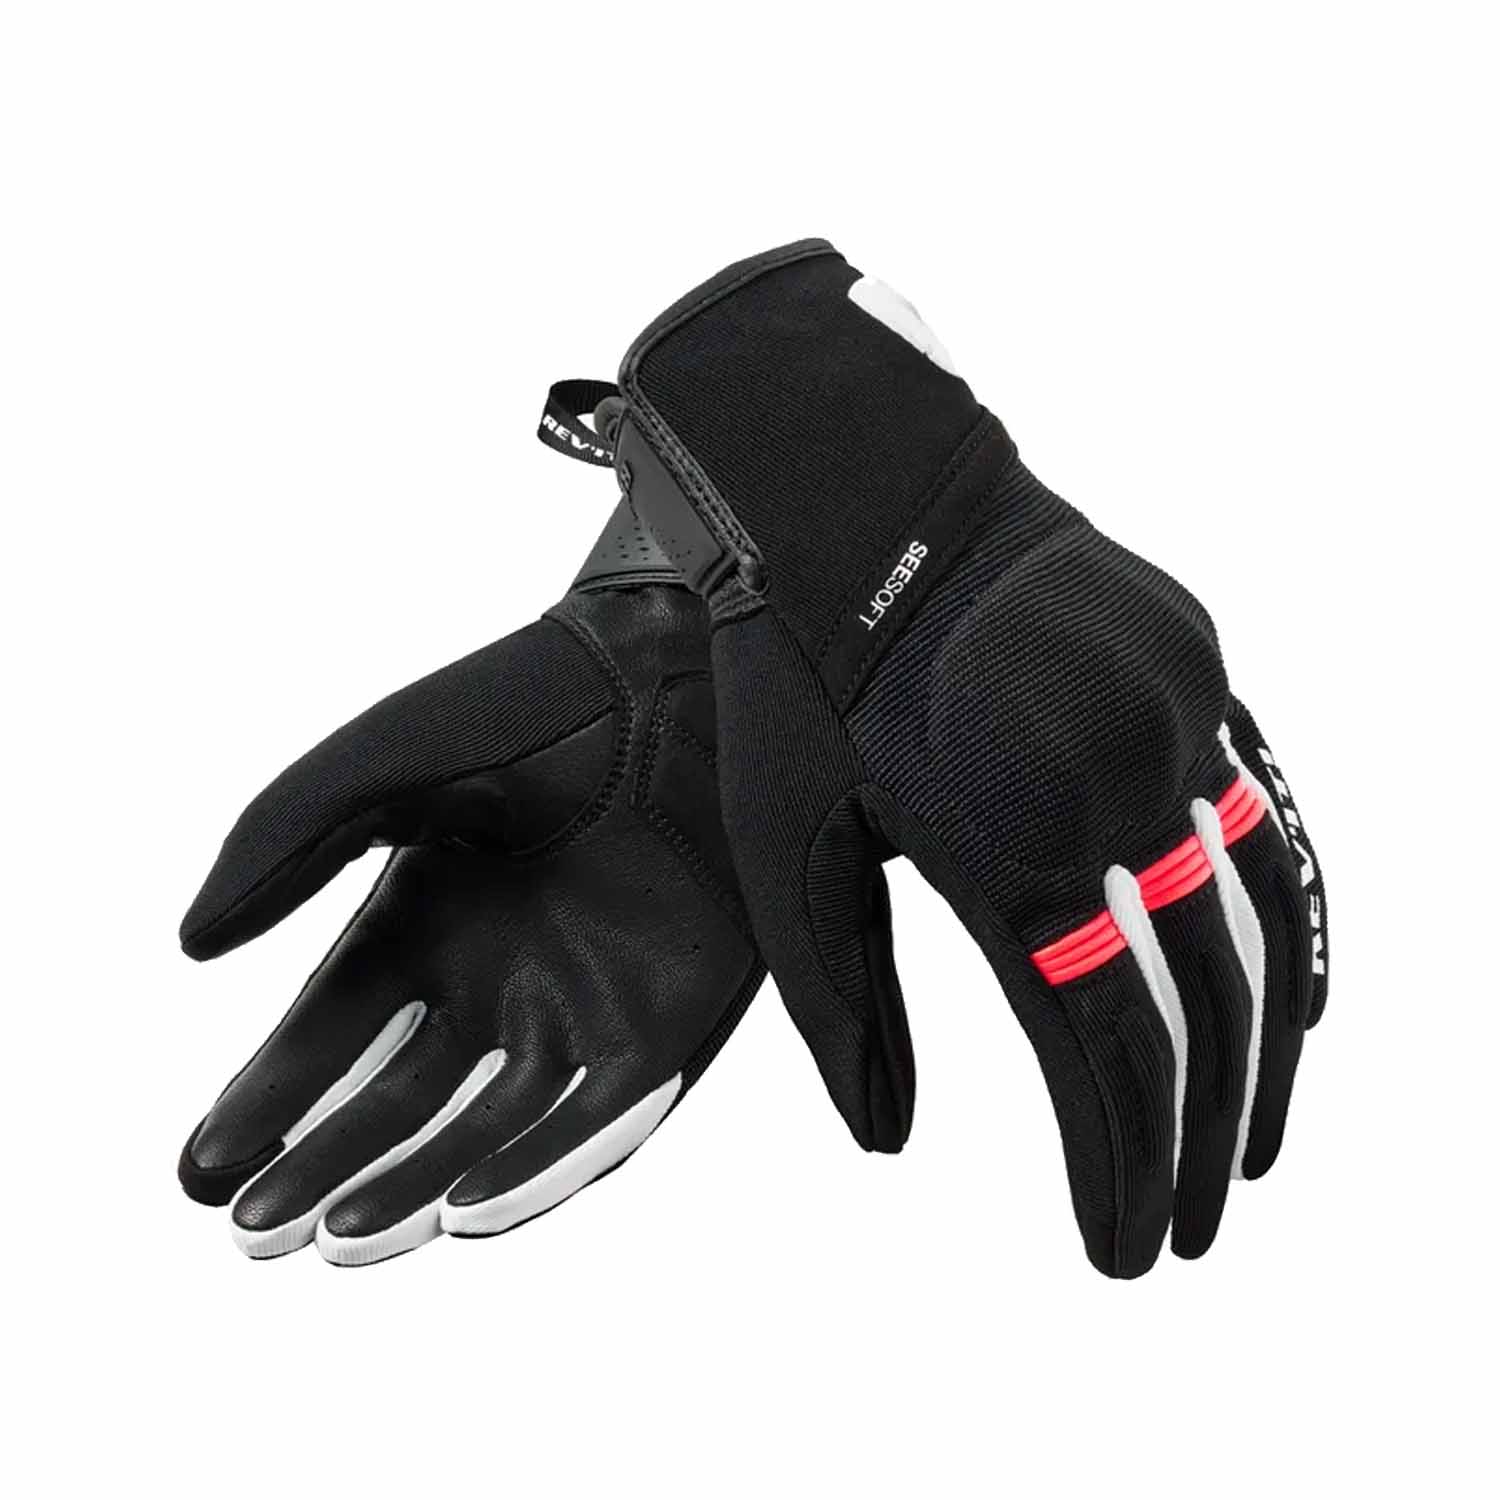 Image of REV'IT! Mosca 2 Ladies Gloves Black Pink Größe XL